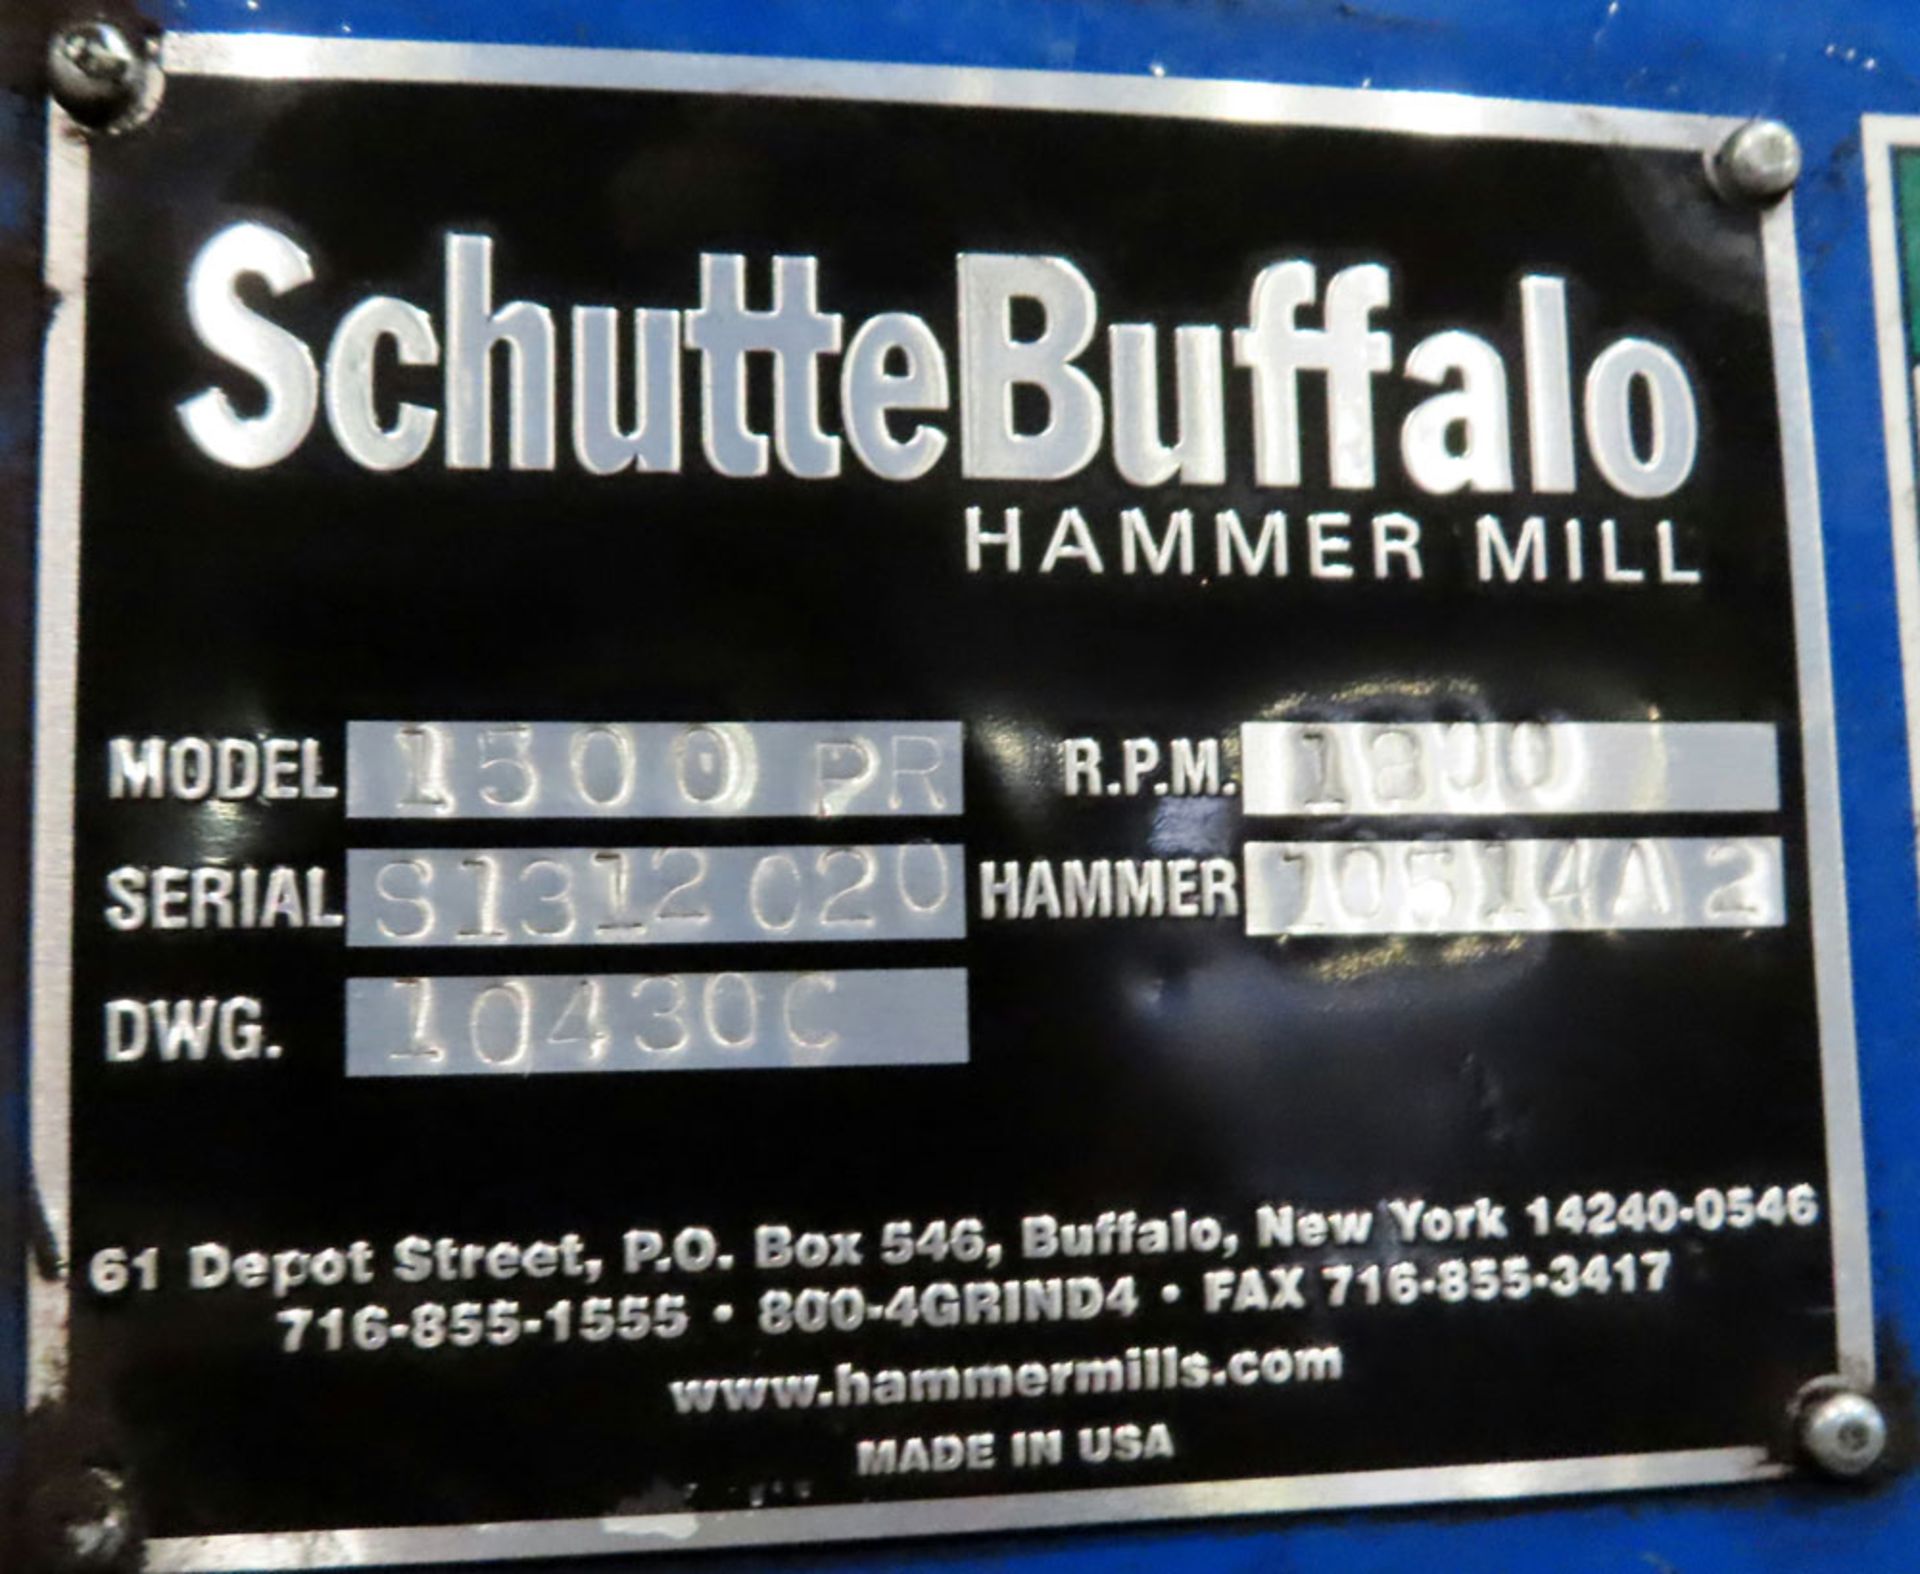 Schutte Buffalo Hammermill - Image 8 of 14